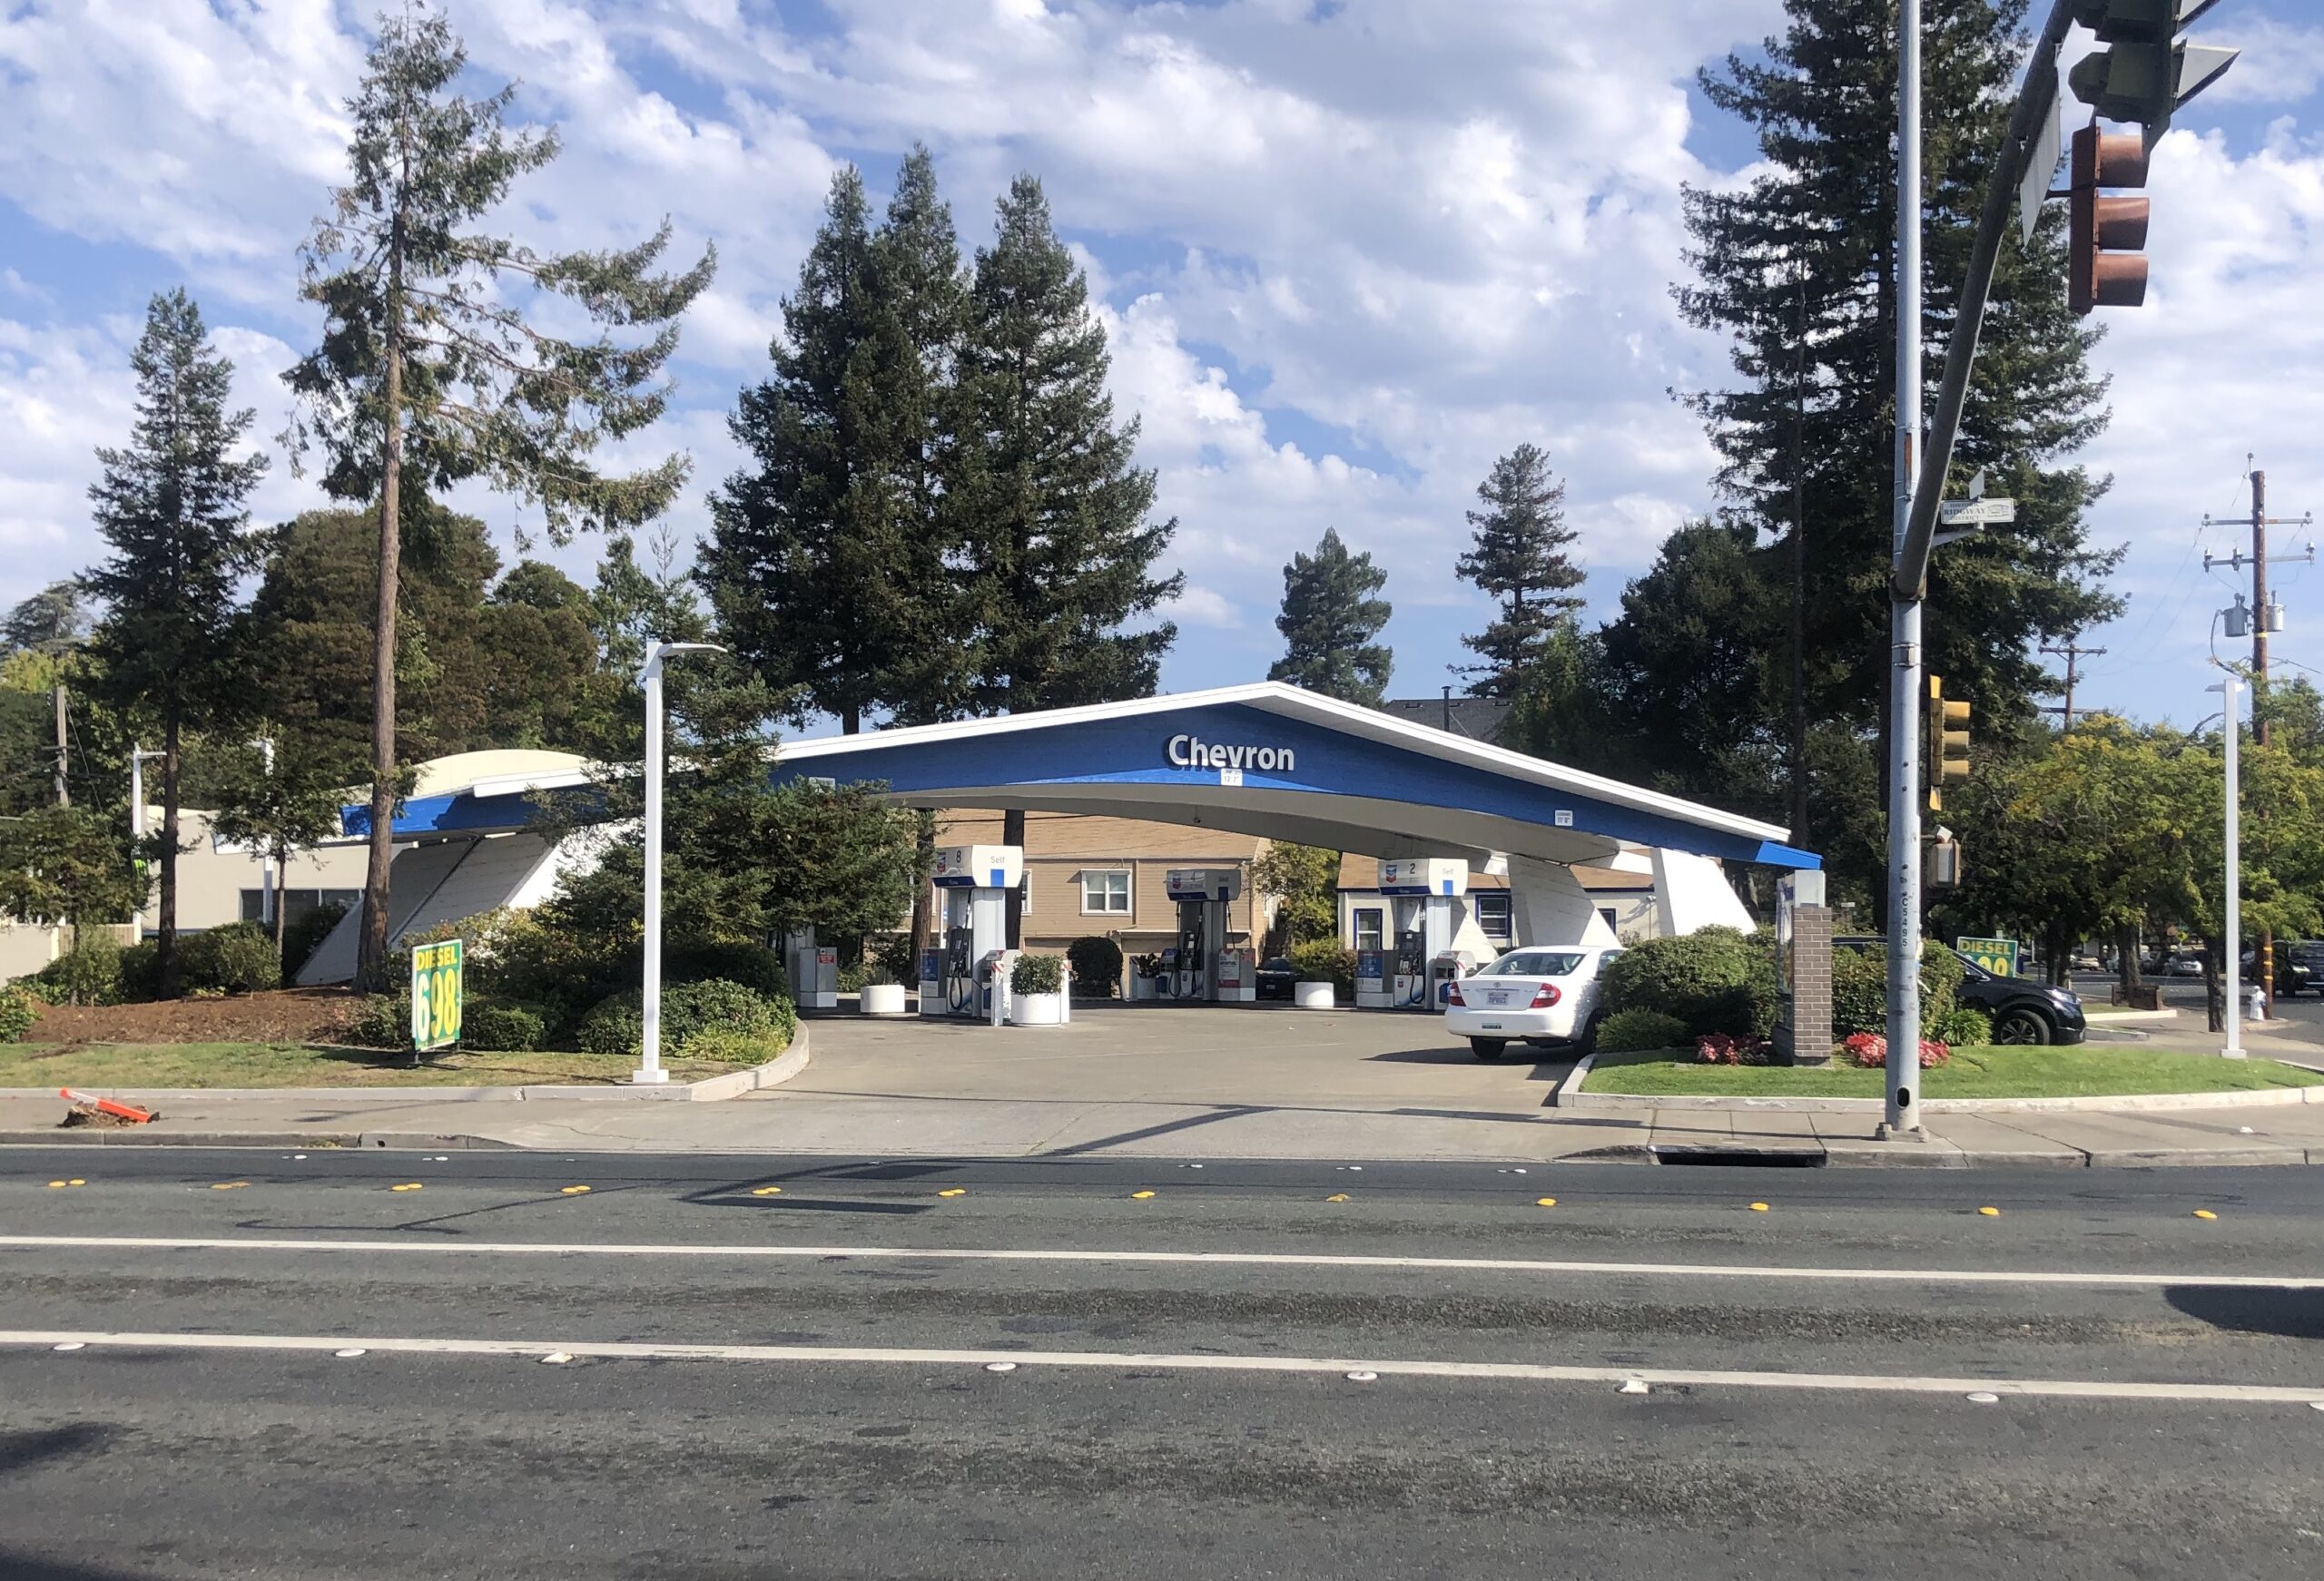 Santa Rosa gas station - August 2022